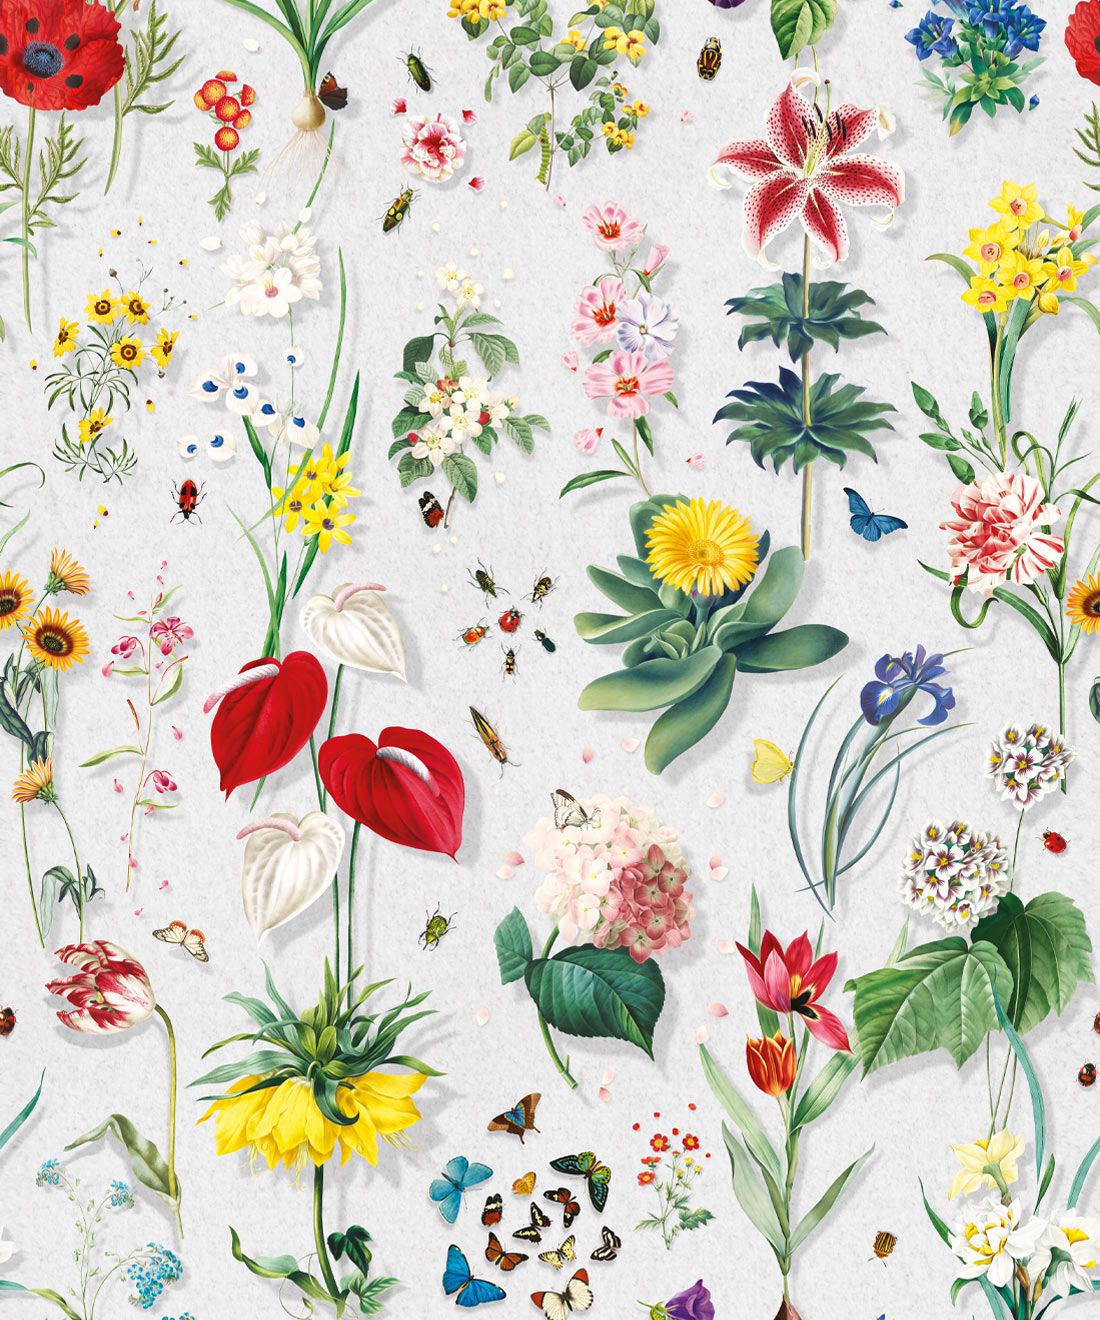 Jolie Wallpaper • Colorful Spring Floral Wallpaper USA